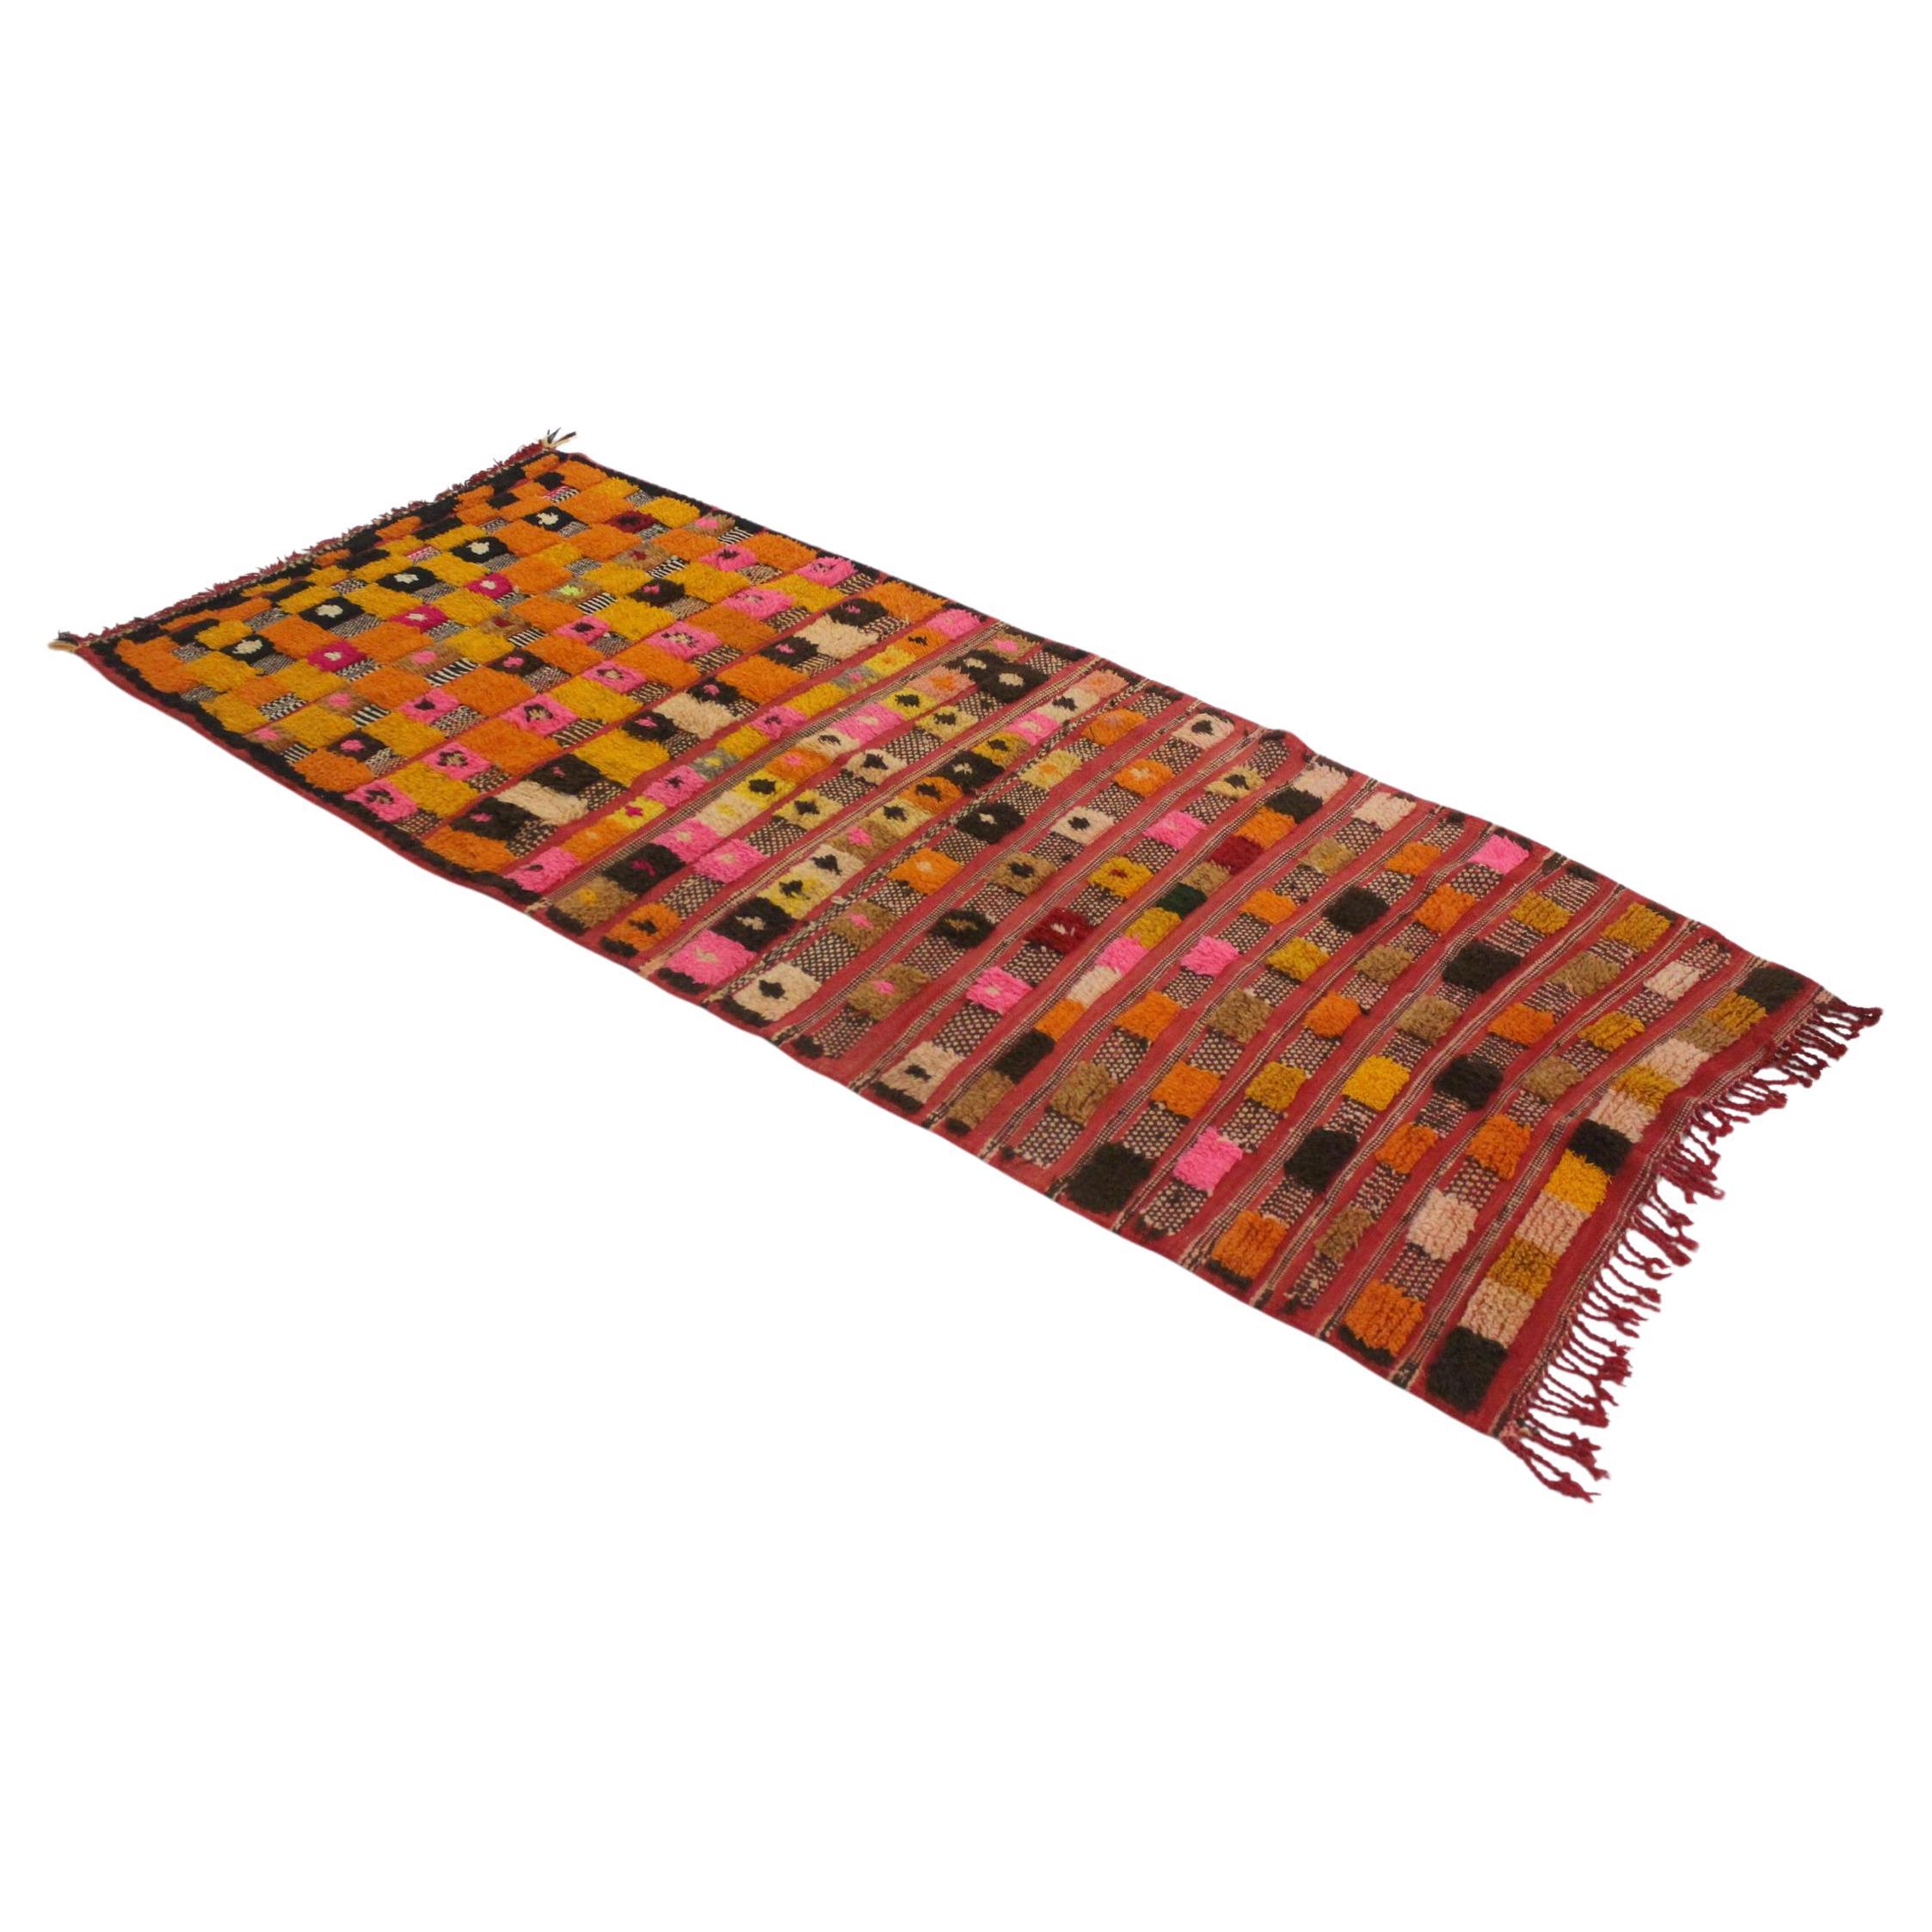 Vintage Moroccan Azilal rug - Red, orange, yellow - 3.3x7.7feet / 102x235cm